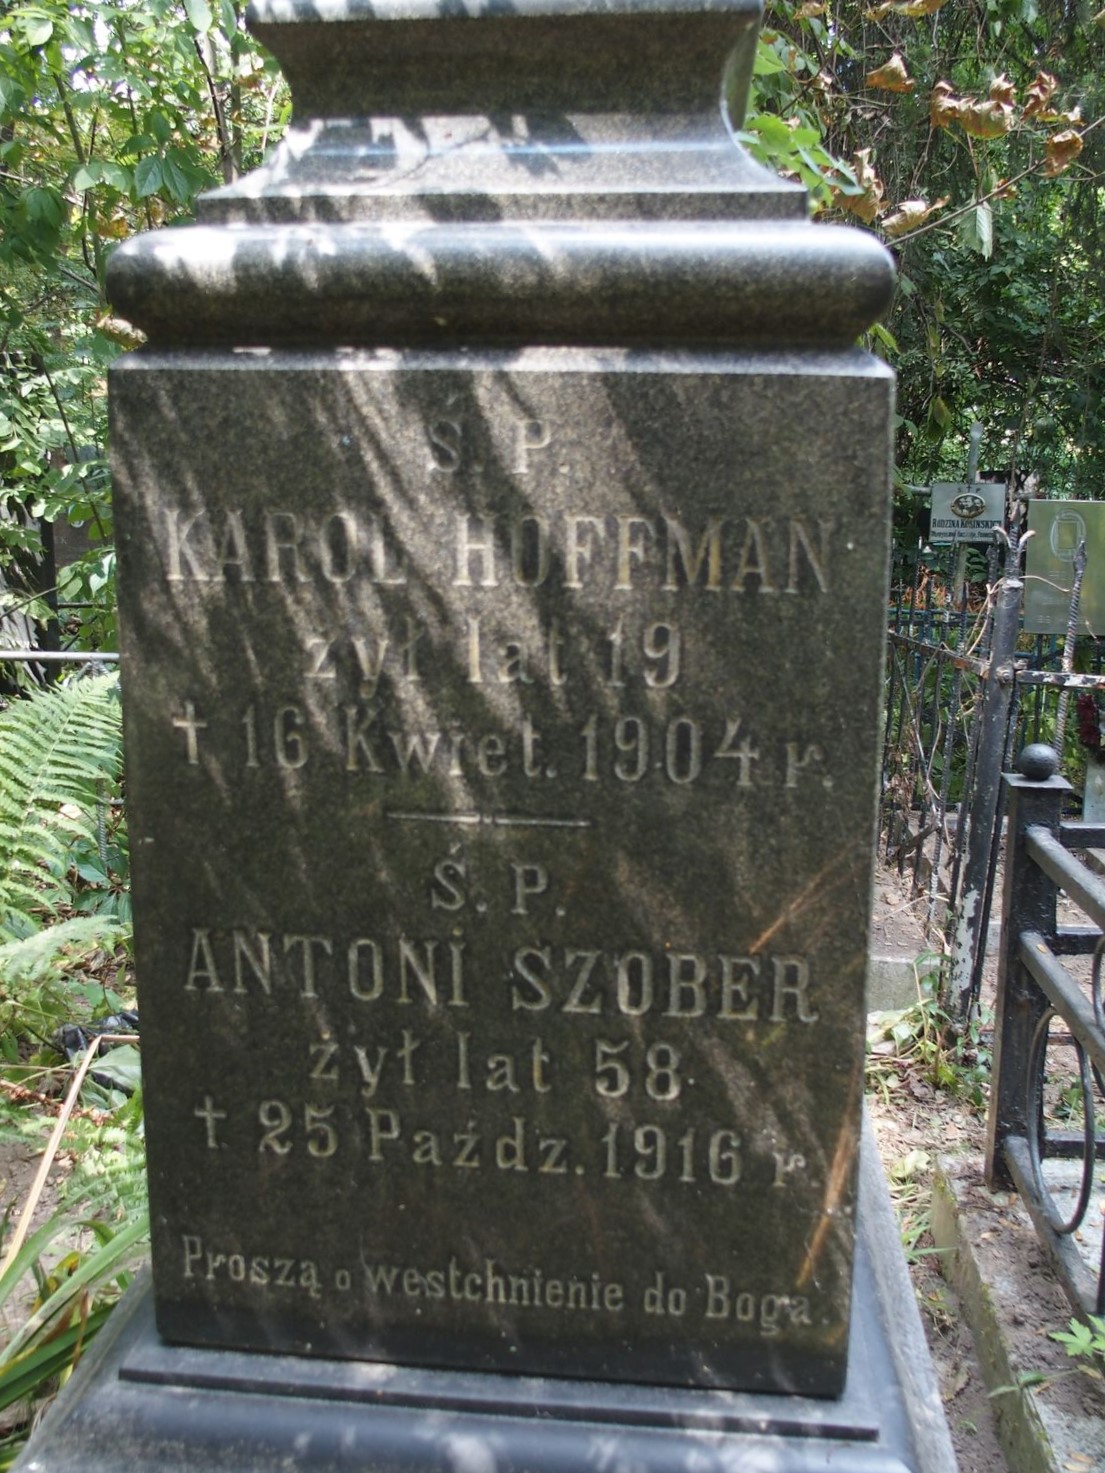 Inscription from the tombstone of Karol Hoffman, Antoni Szober